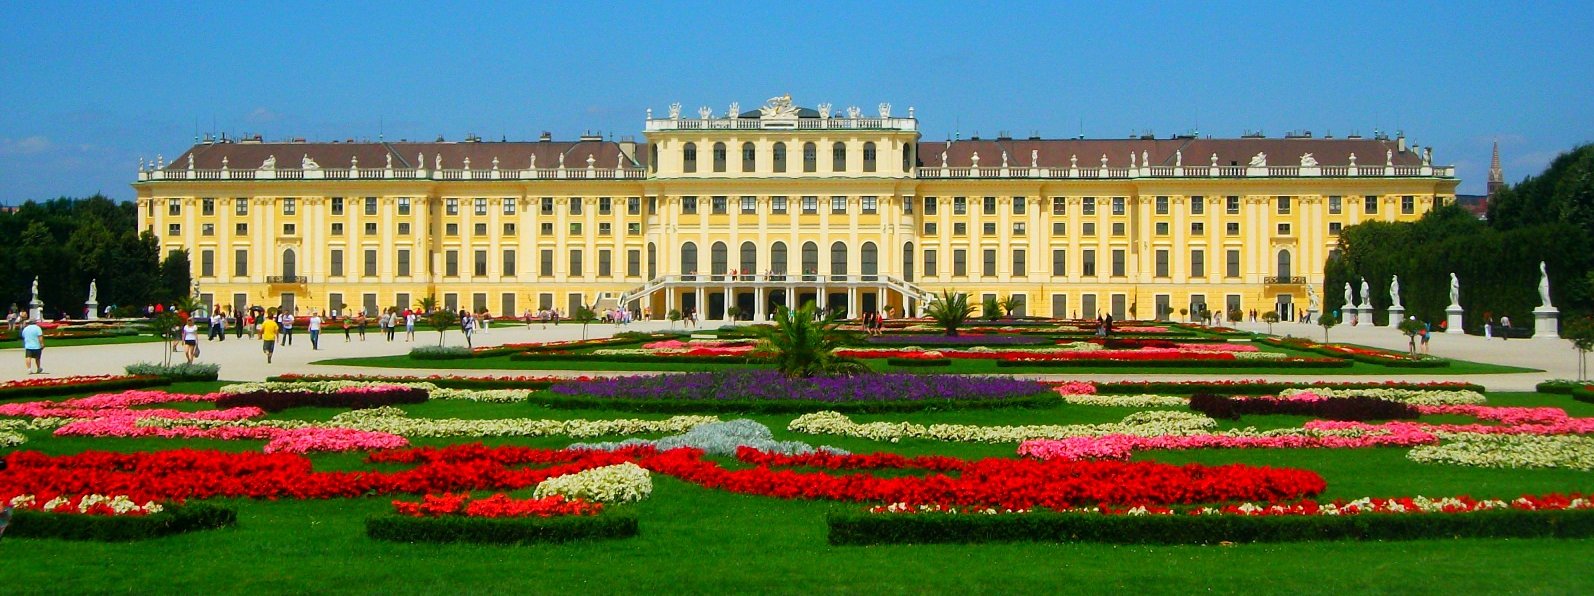 Schönbrunn Palace Vienna Google image from http://upload.wikimedia.org/wikipedia/commons/4/47/Sch%C3%B6nbrunn_Palace_01.jpg